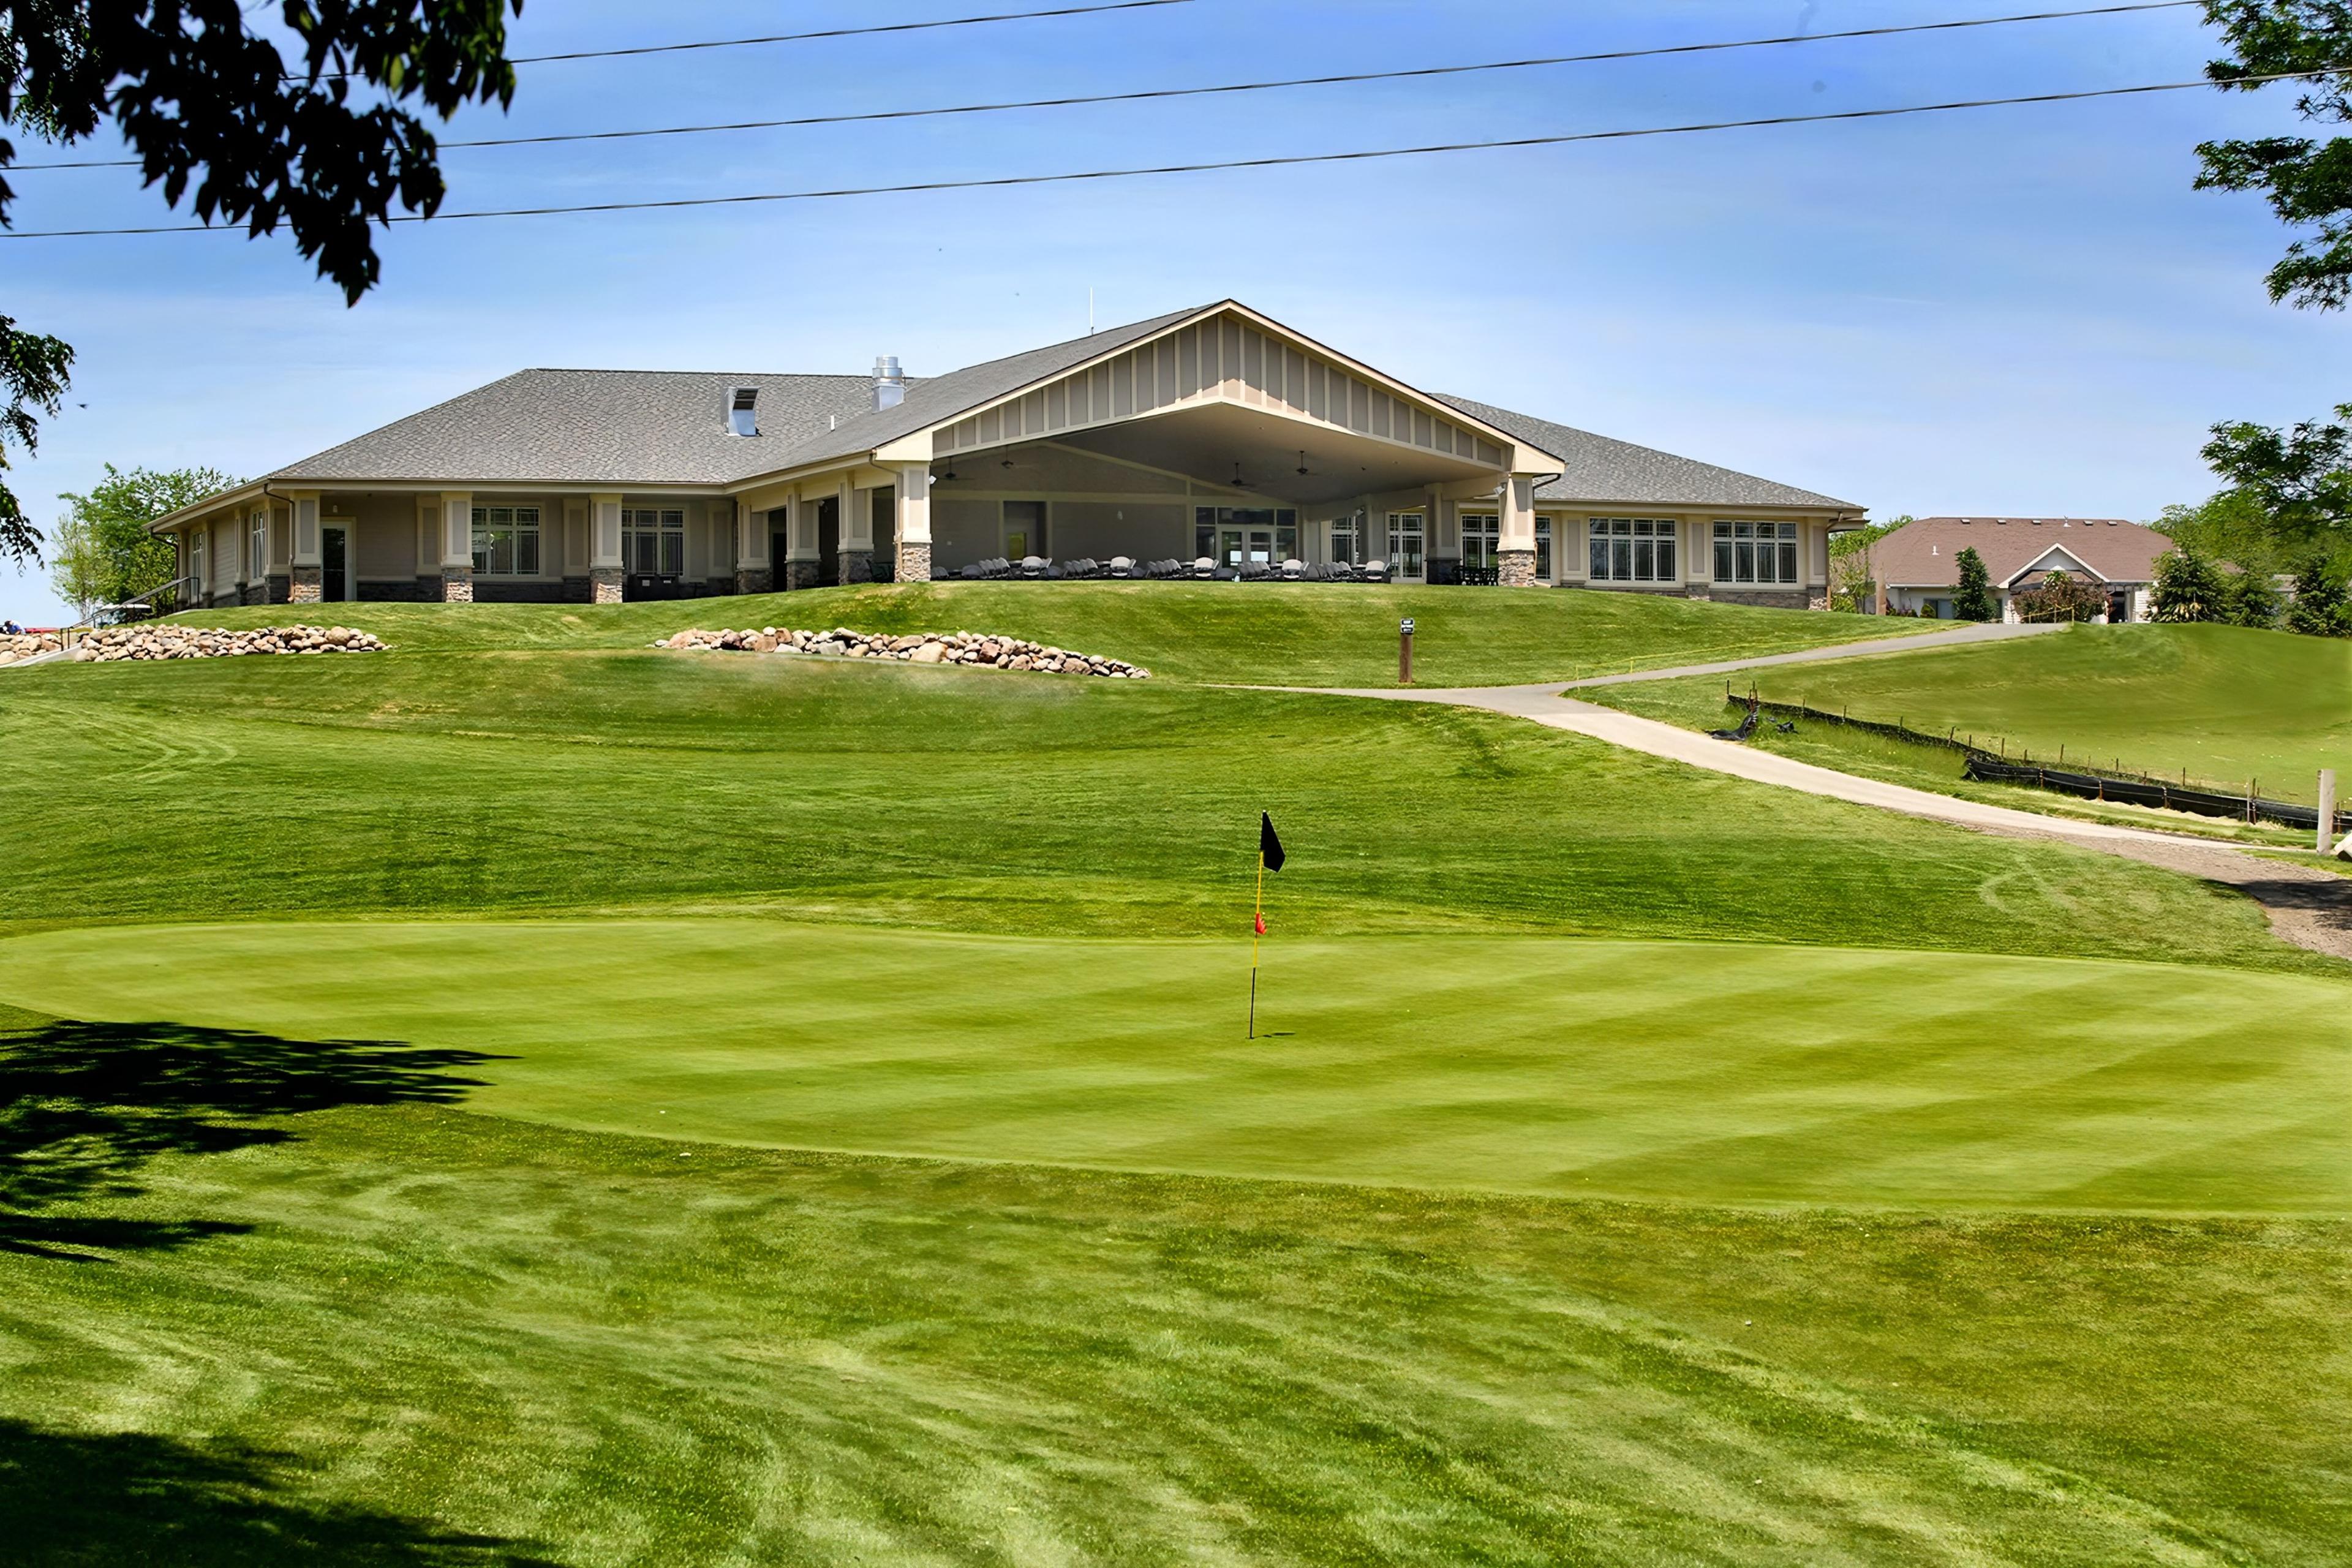 Copper Creek Golf Club and Event Center